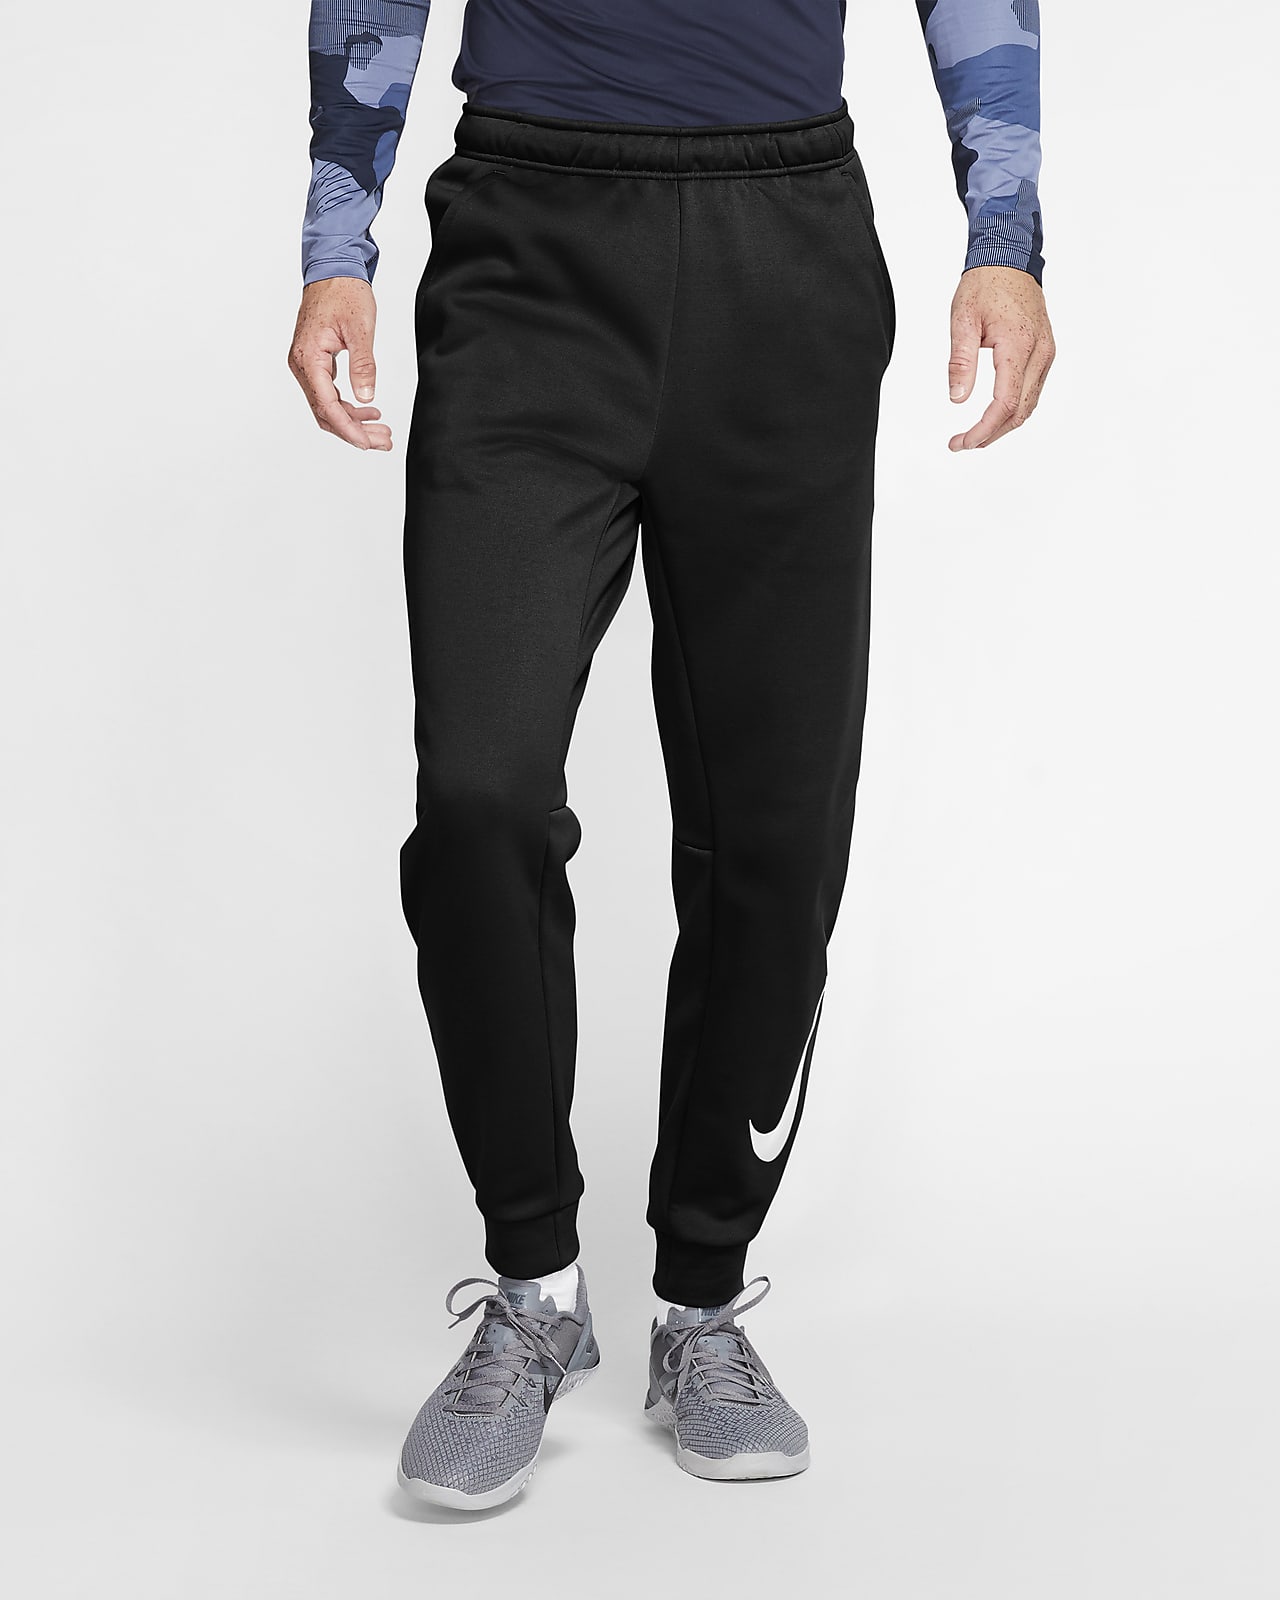 Nike公式 ナイキ サーマ メンズ テーパード トレーニングパンツ オンラインストア 通販サイト